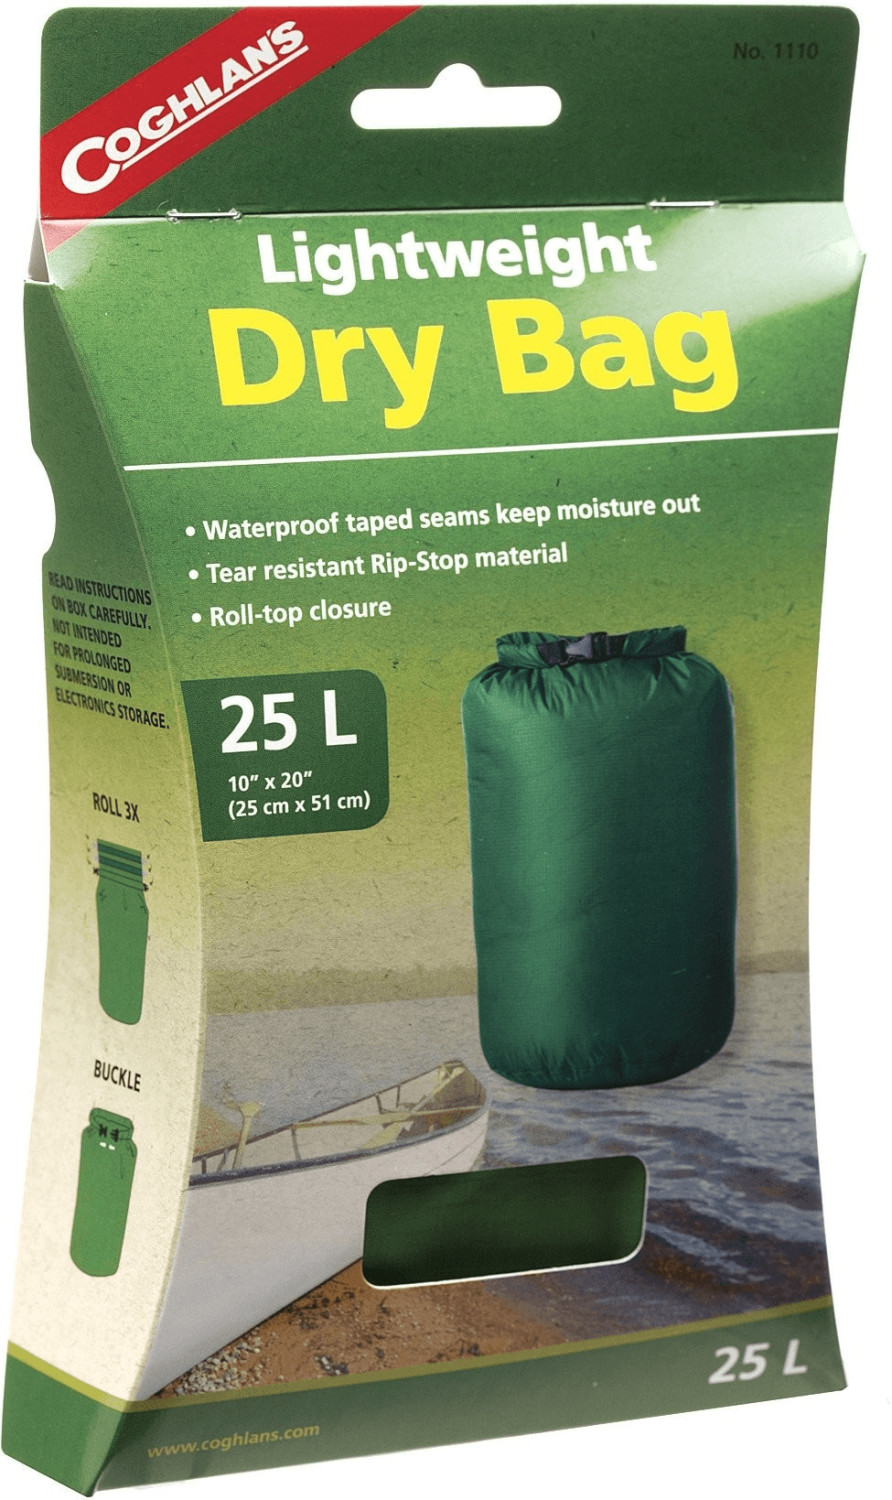 Photos - Dry Bag Coghlans Coghlan's Lightweight   (55 L)